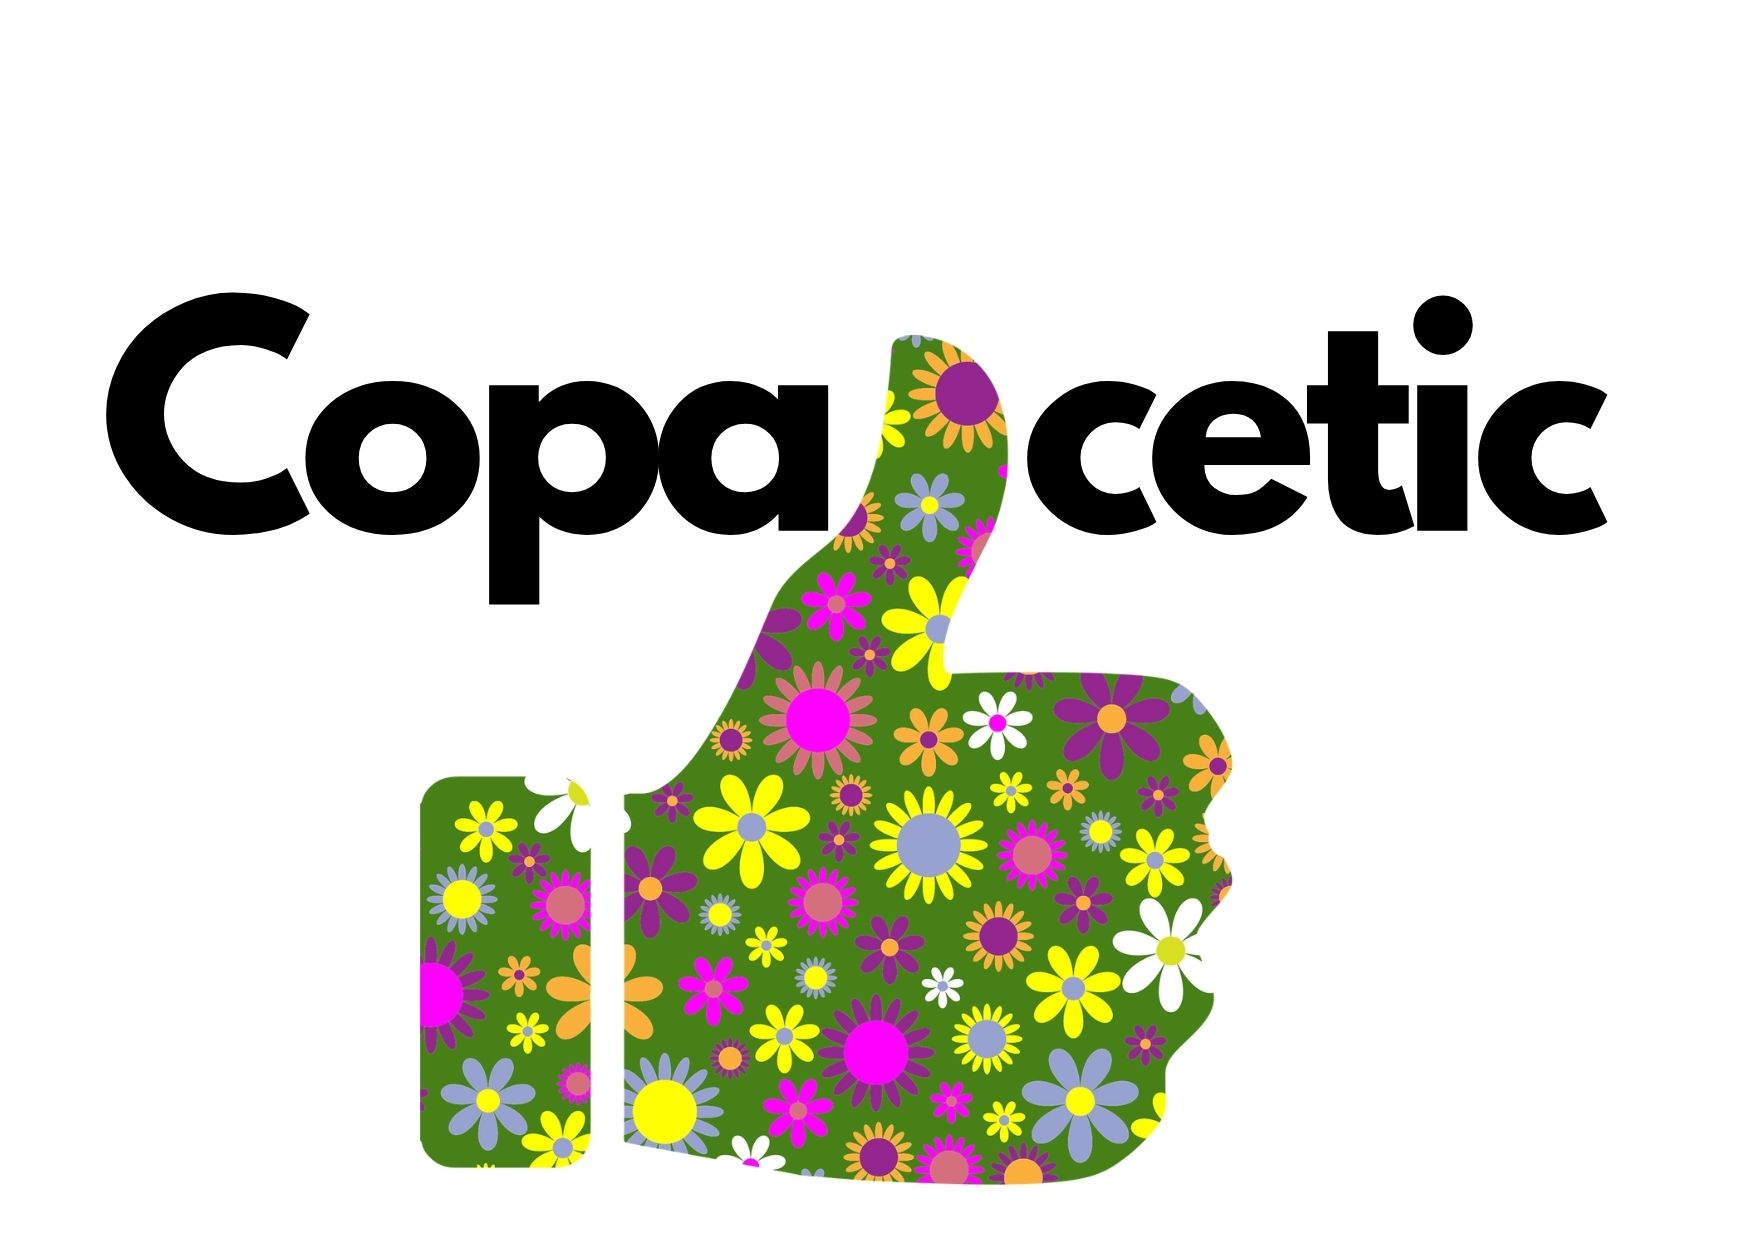 Copacetic = Okay